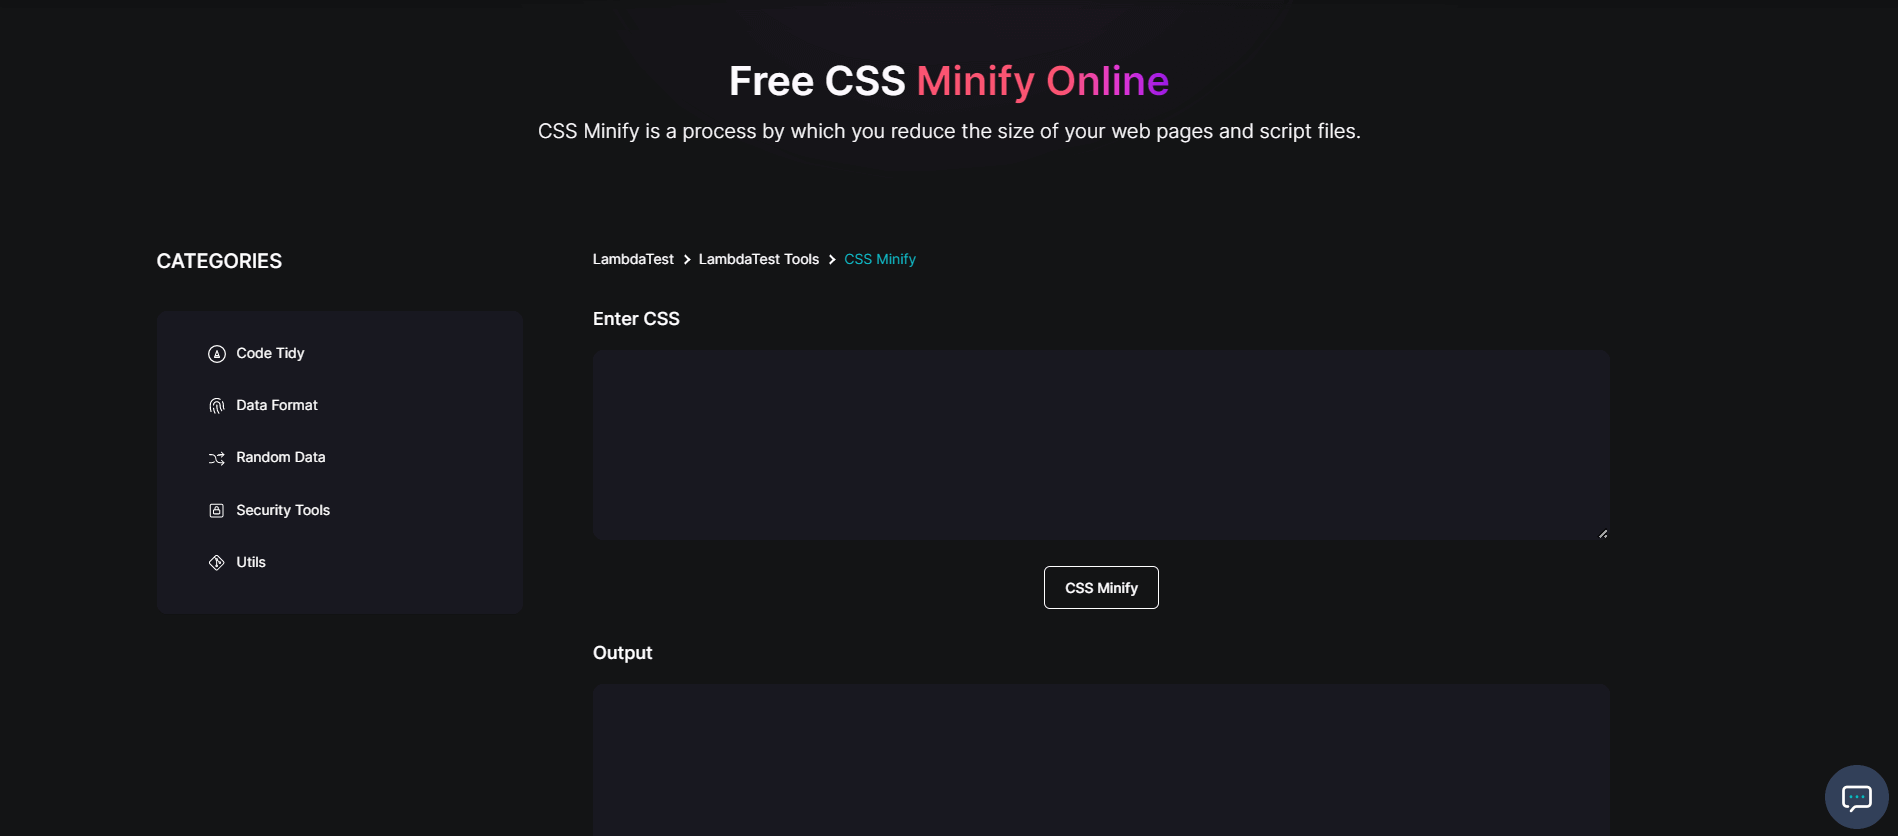 CSS Minify free tool